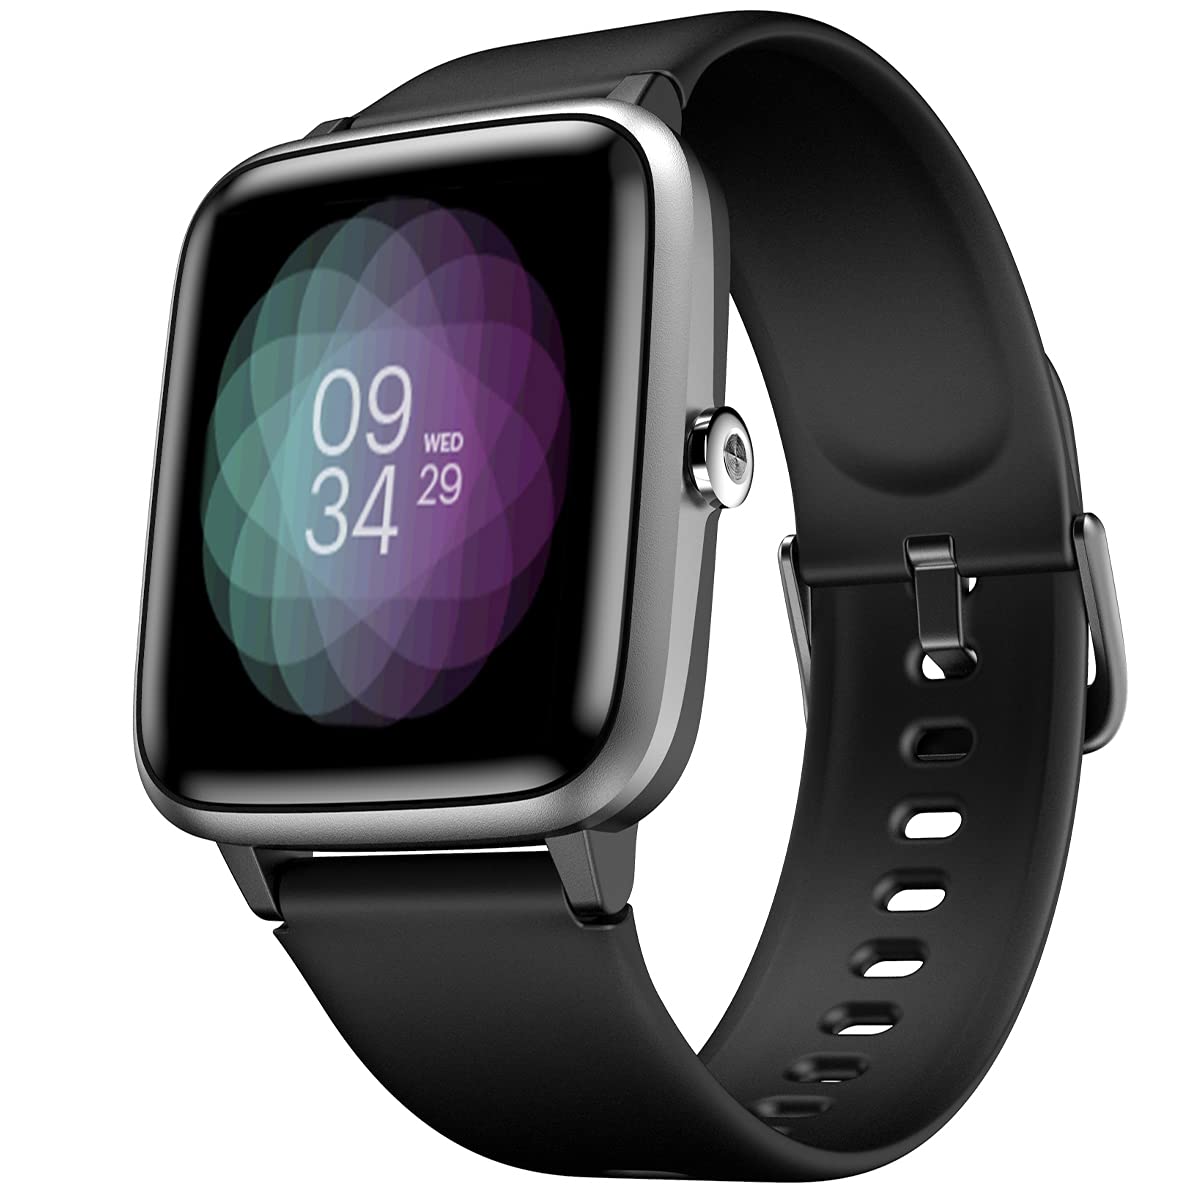 7 Best Apple Watch Alternatives Under 5000 Rs. - April 2022